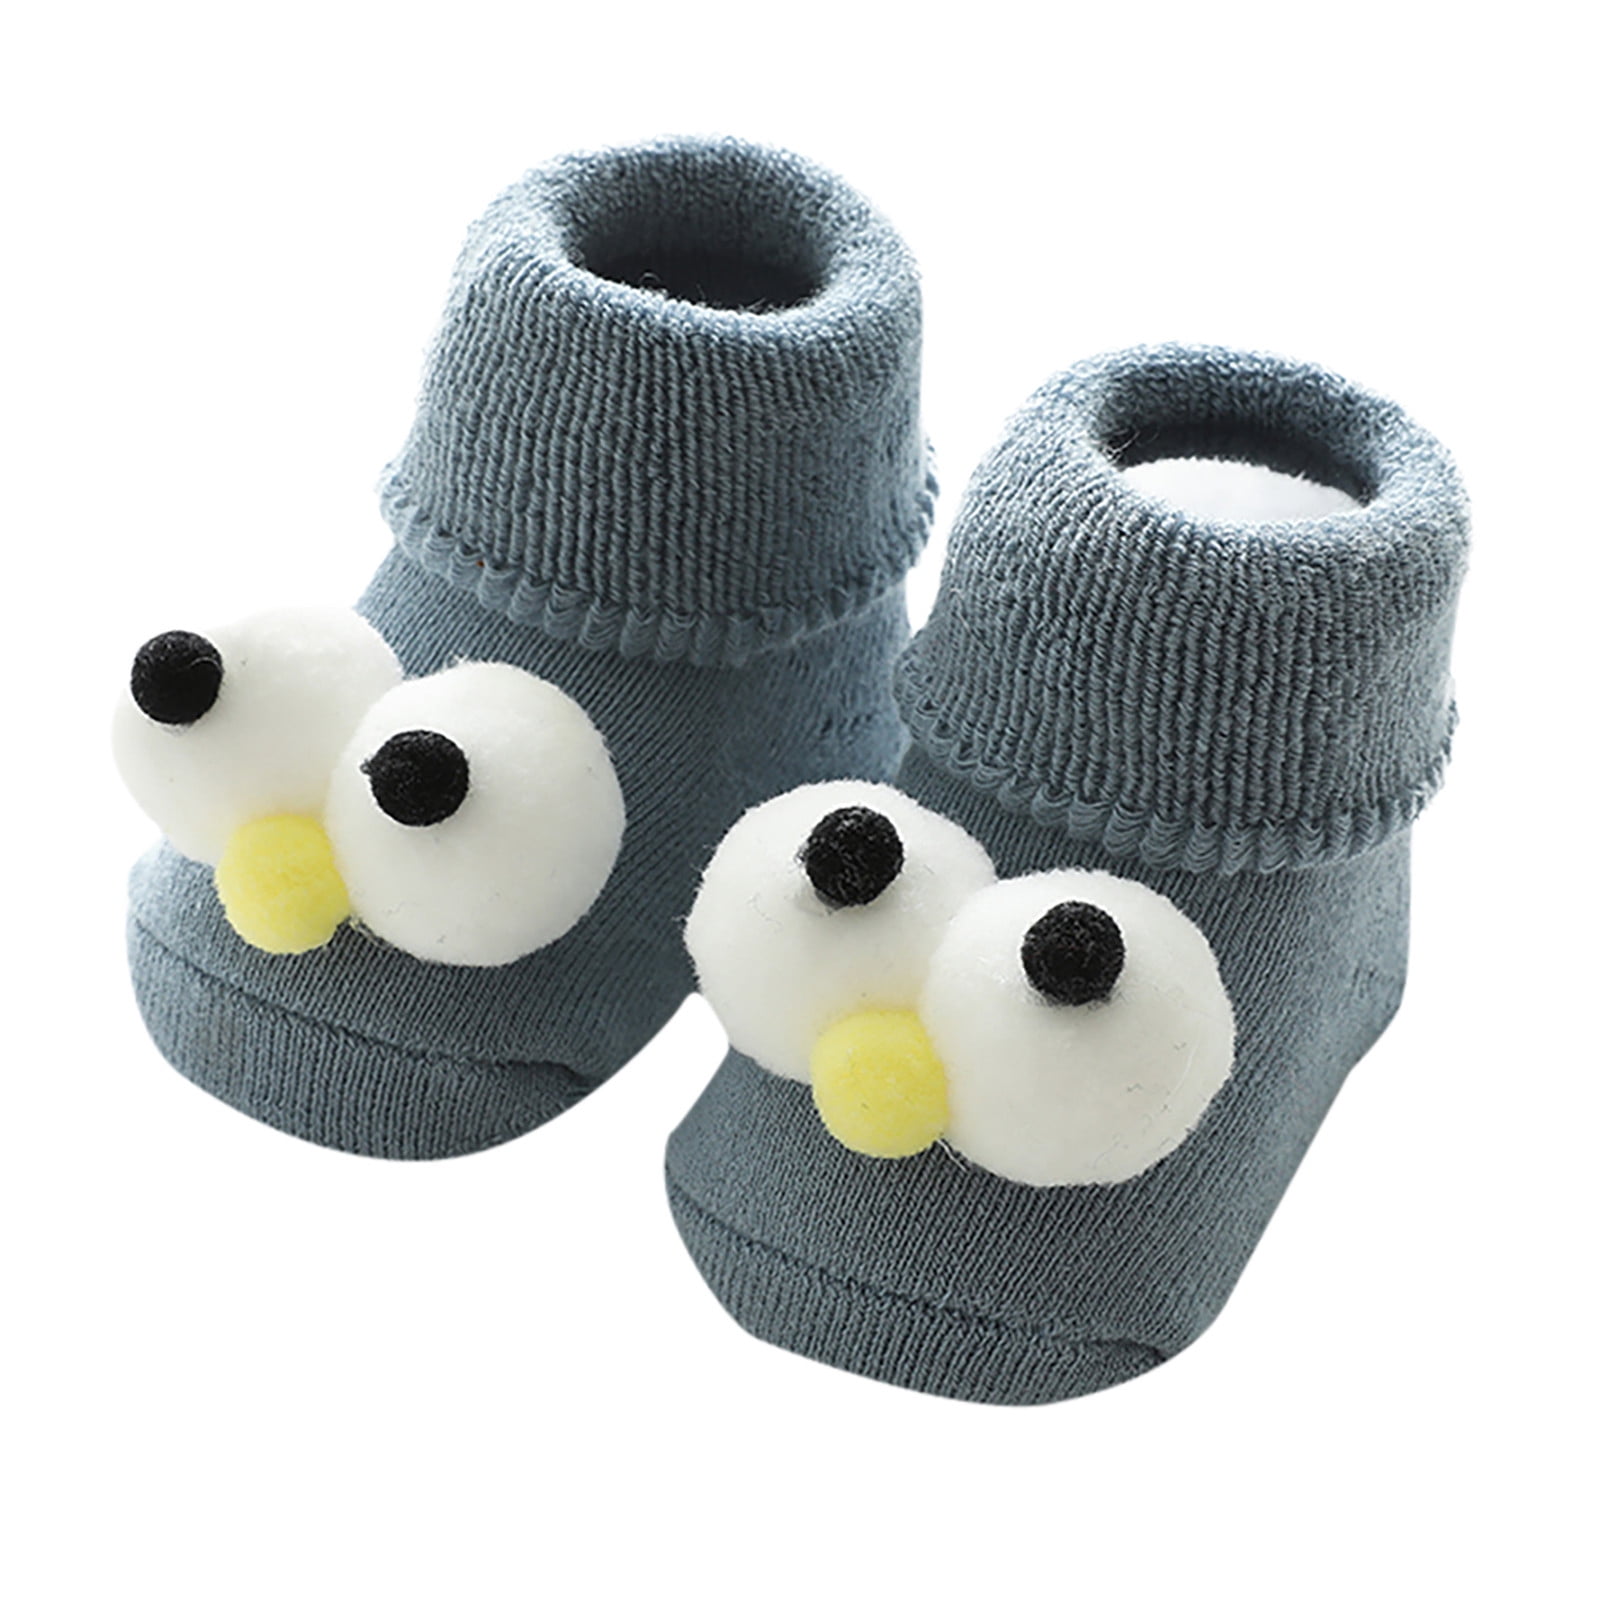 Baby Slipper Socks Baby Girls Boys Socks Toddler Cotton Socks for 0-1 Years Old Baby Cartoon Animal Thick Warm Anti-Slip Shoes Boots 